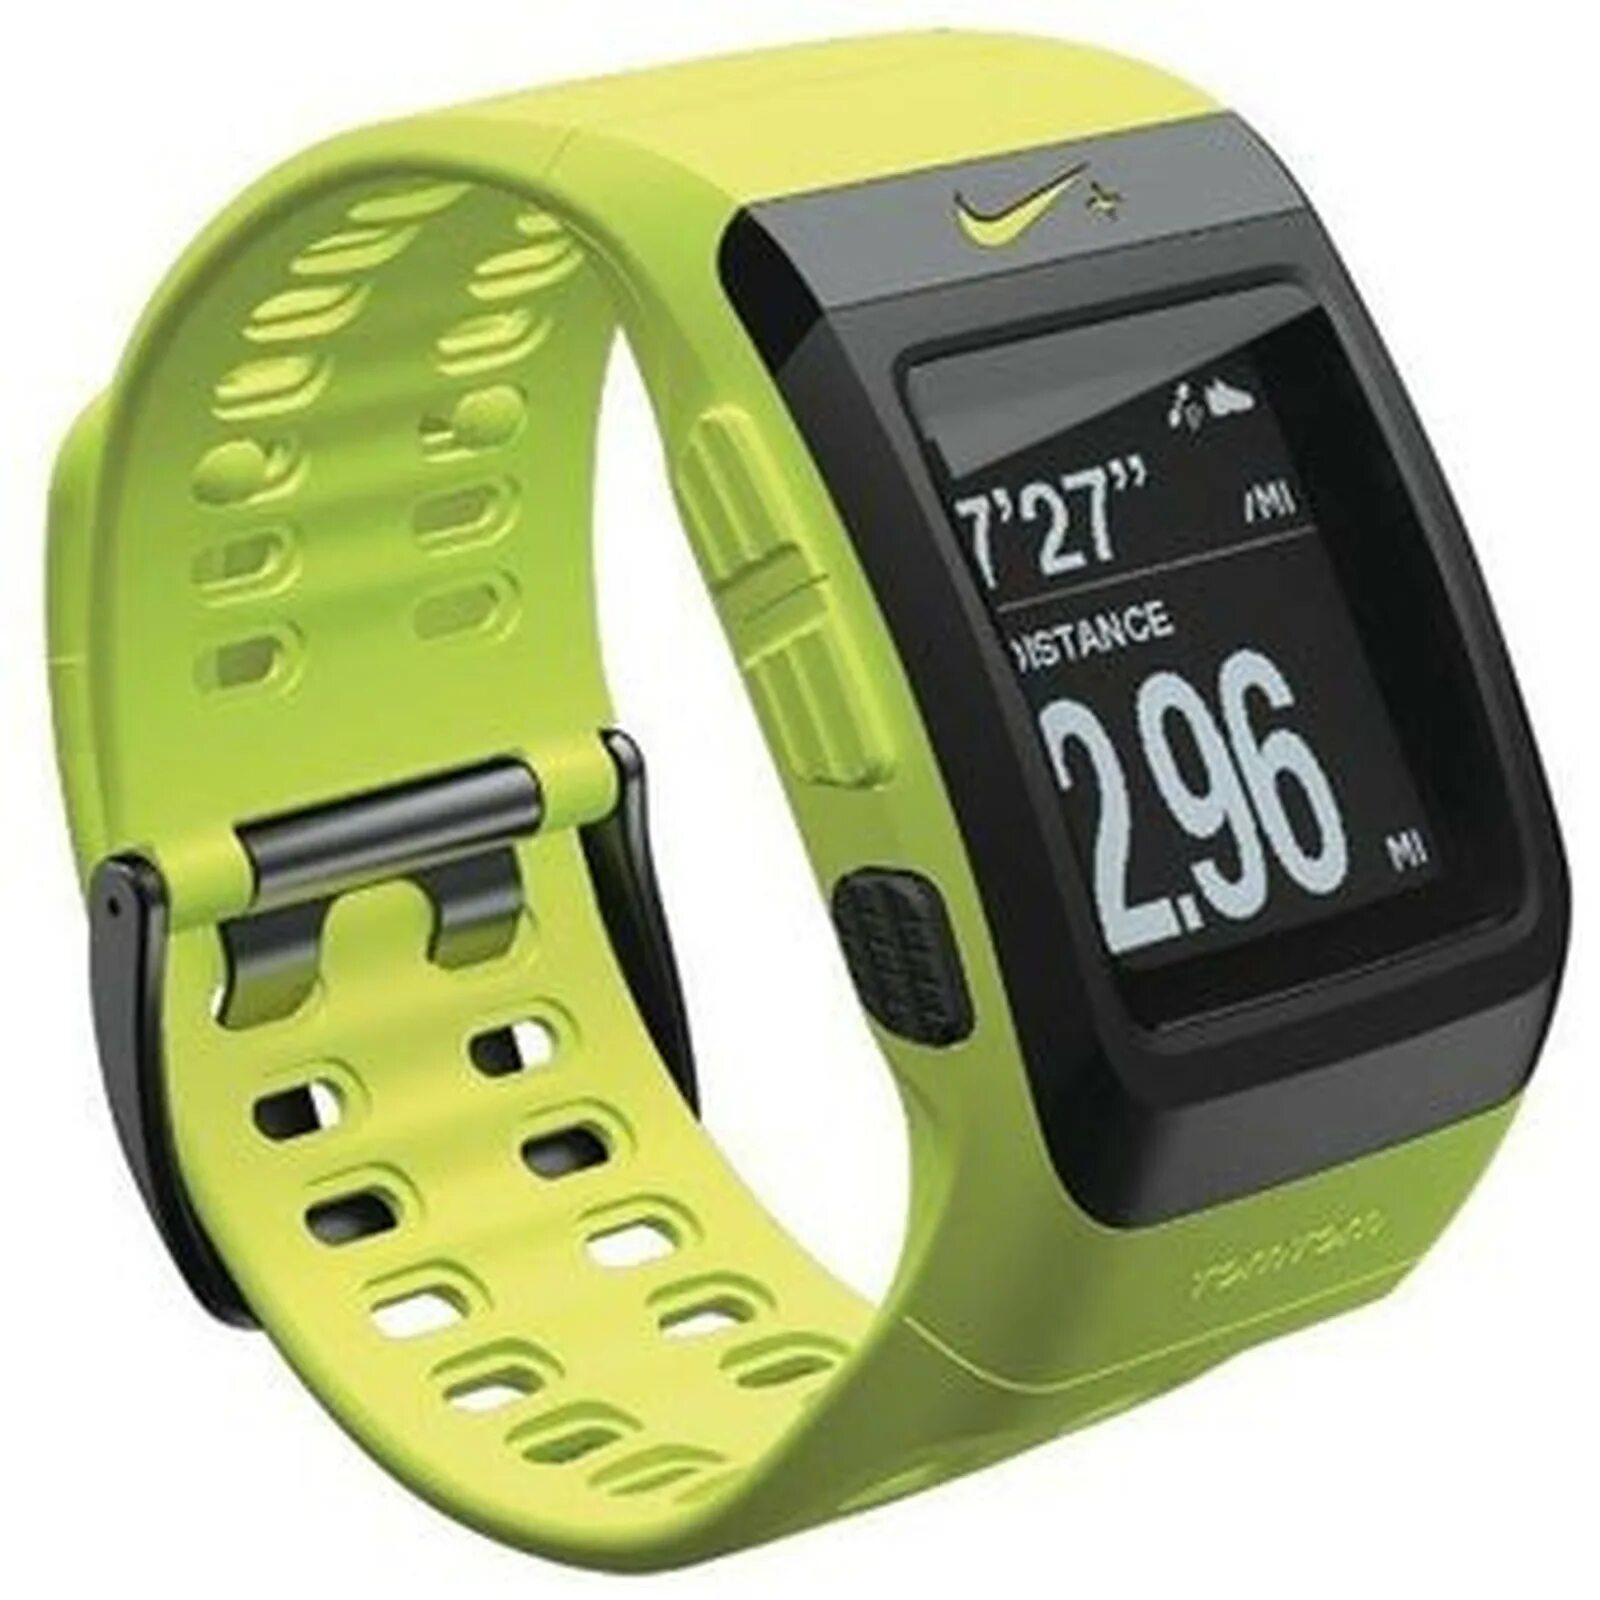 Часы Nike sportwatch GPS. Часы Nike TOMTOM USB. Электронные наручные часы с шагомером t9025. Nike+ sportwatch GPS TOMTOM аккумулятор. Купить часы шагомер с измерением